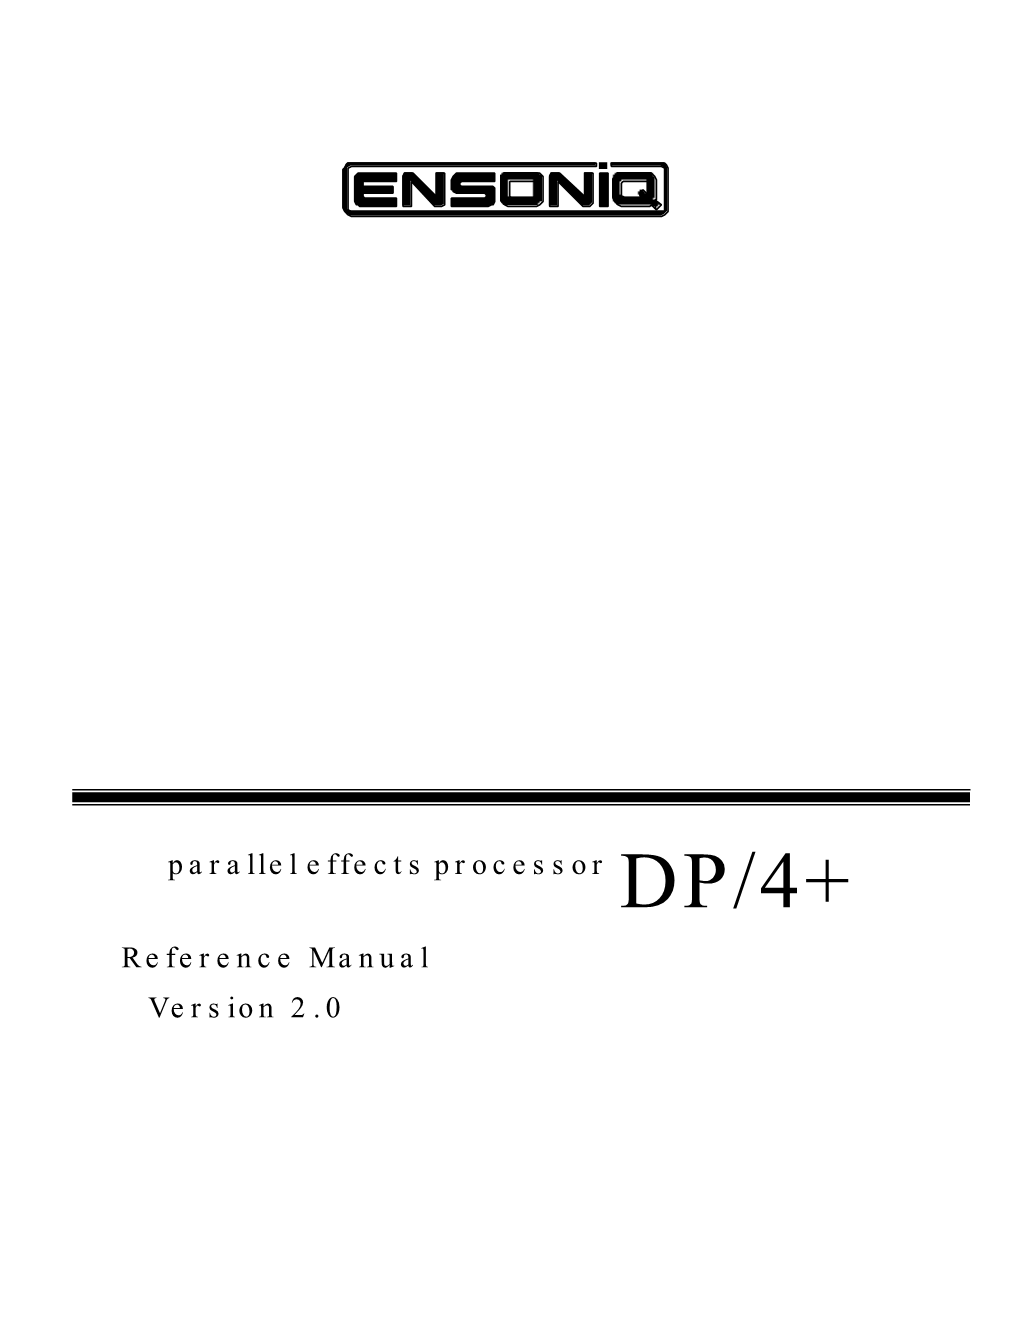 ENSONIQ DP/4+ Parallel Effects Processor